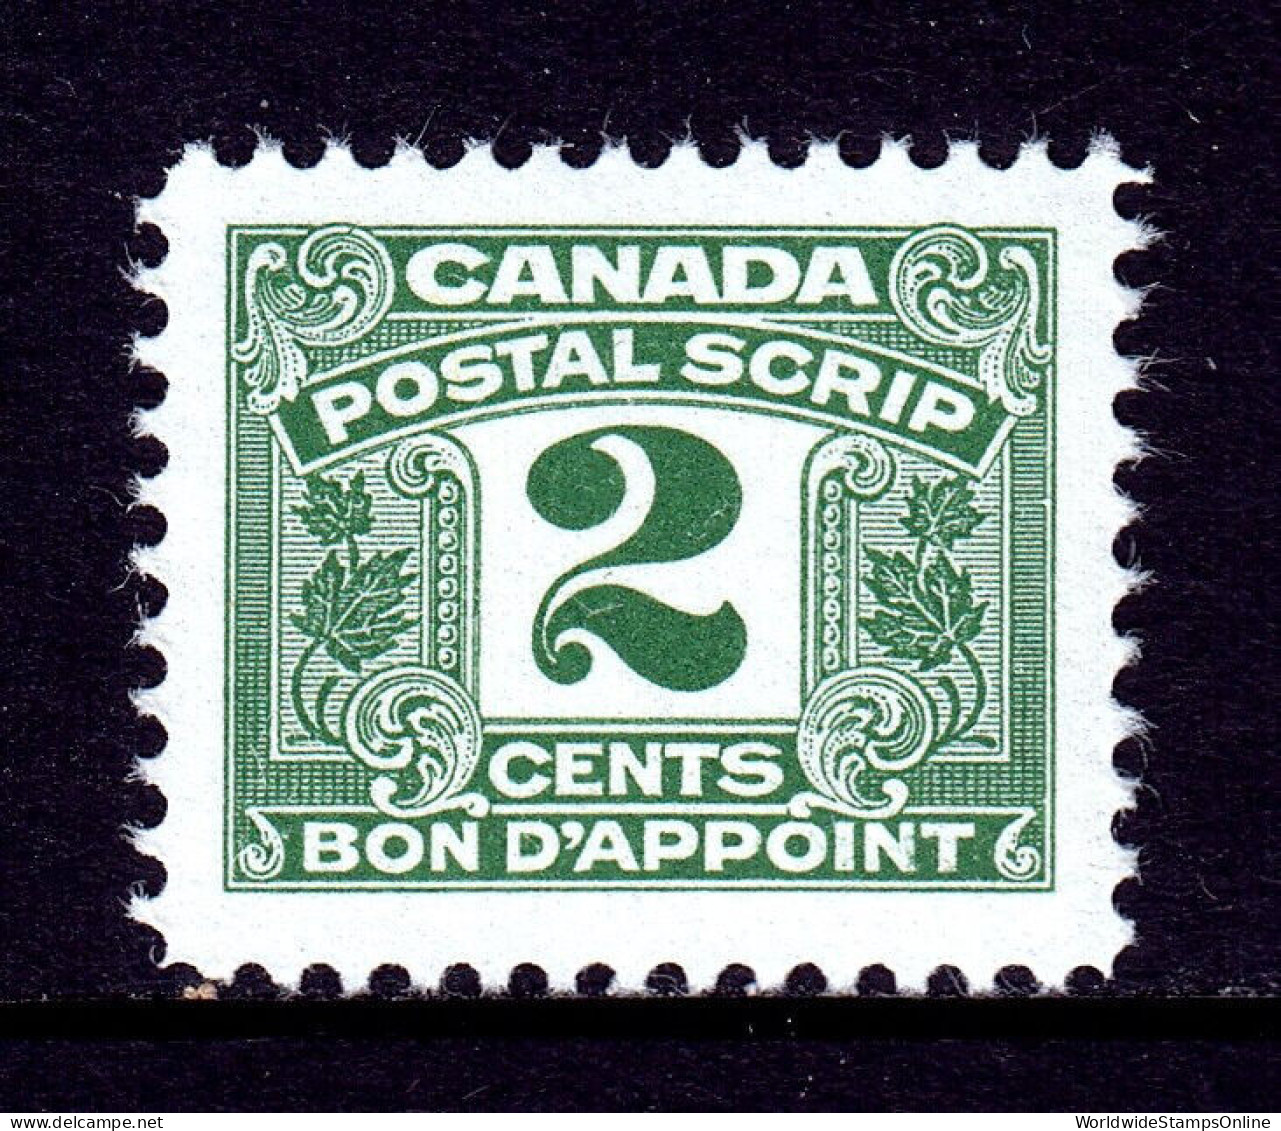 CANADA — VAN DAM FPS42 — 2¢ THIRD ISSUE POSTAL SCRIPT — MNH — CV $31 - Fiscali